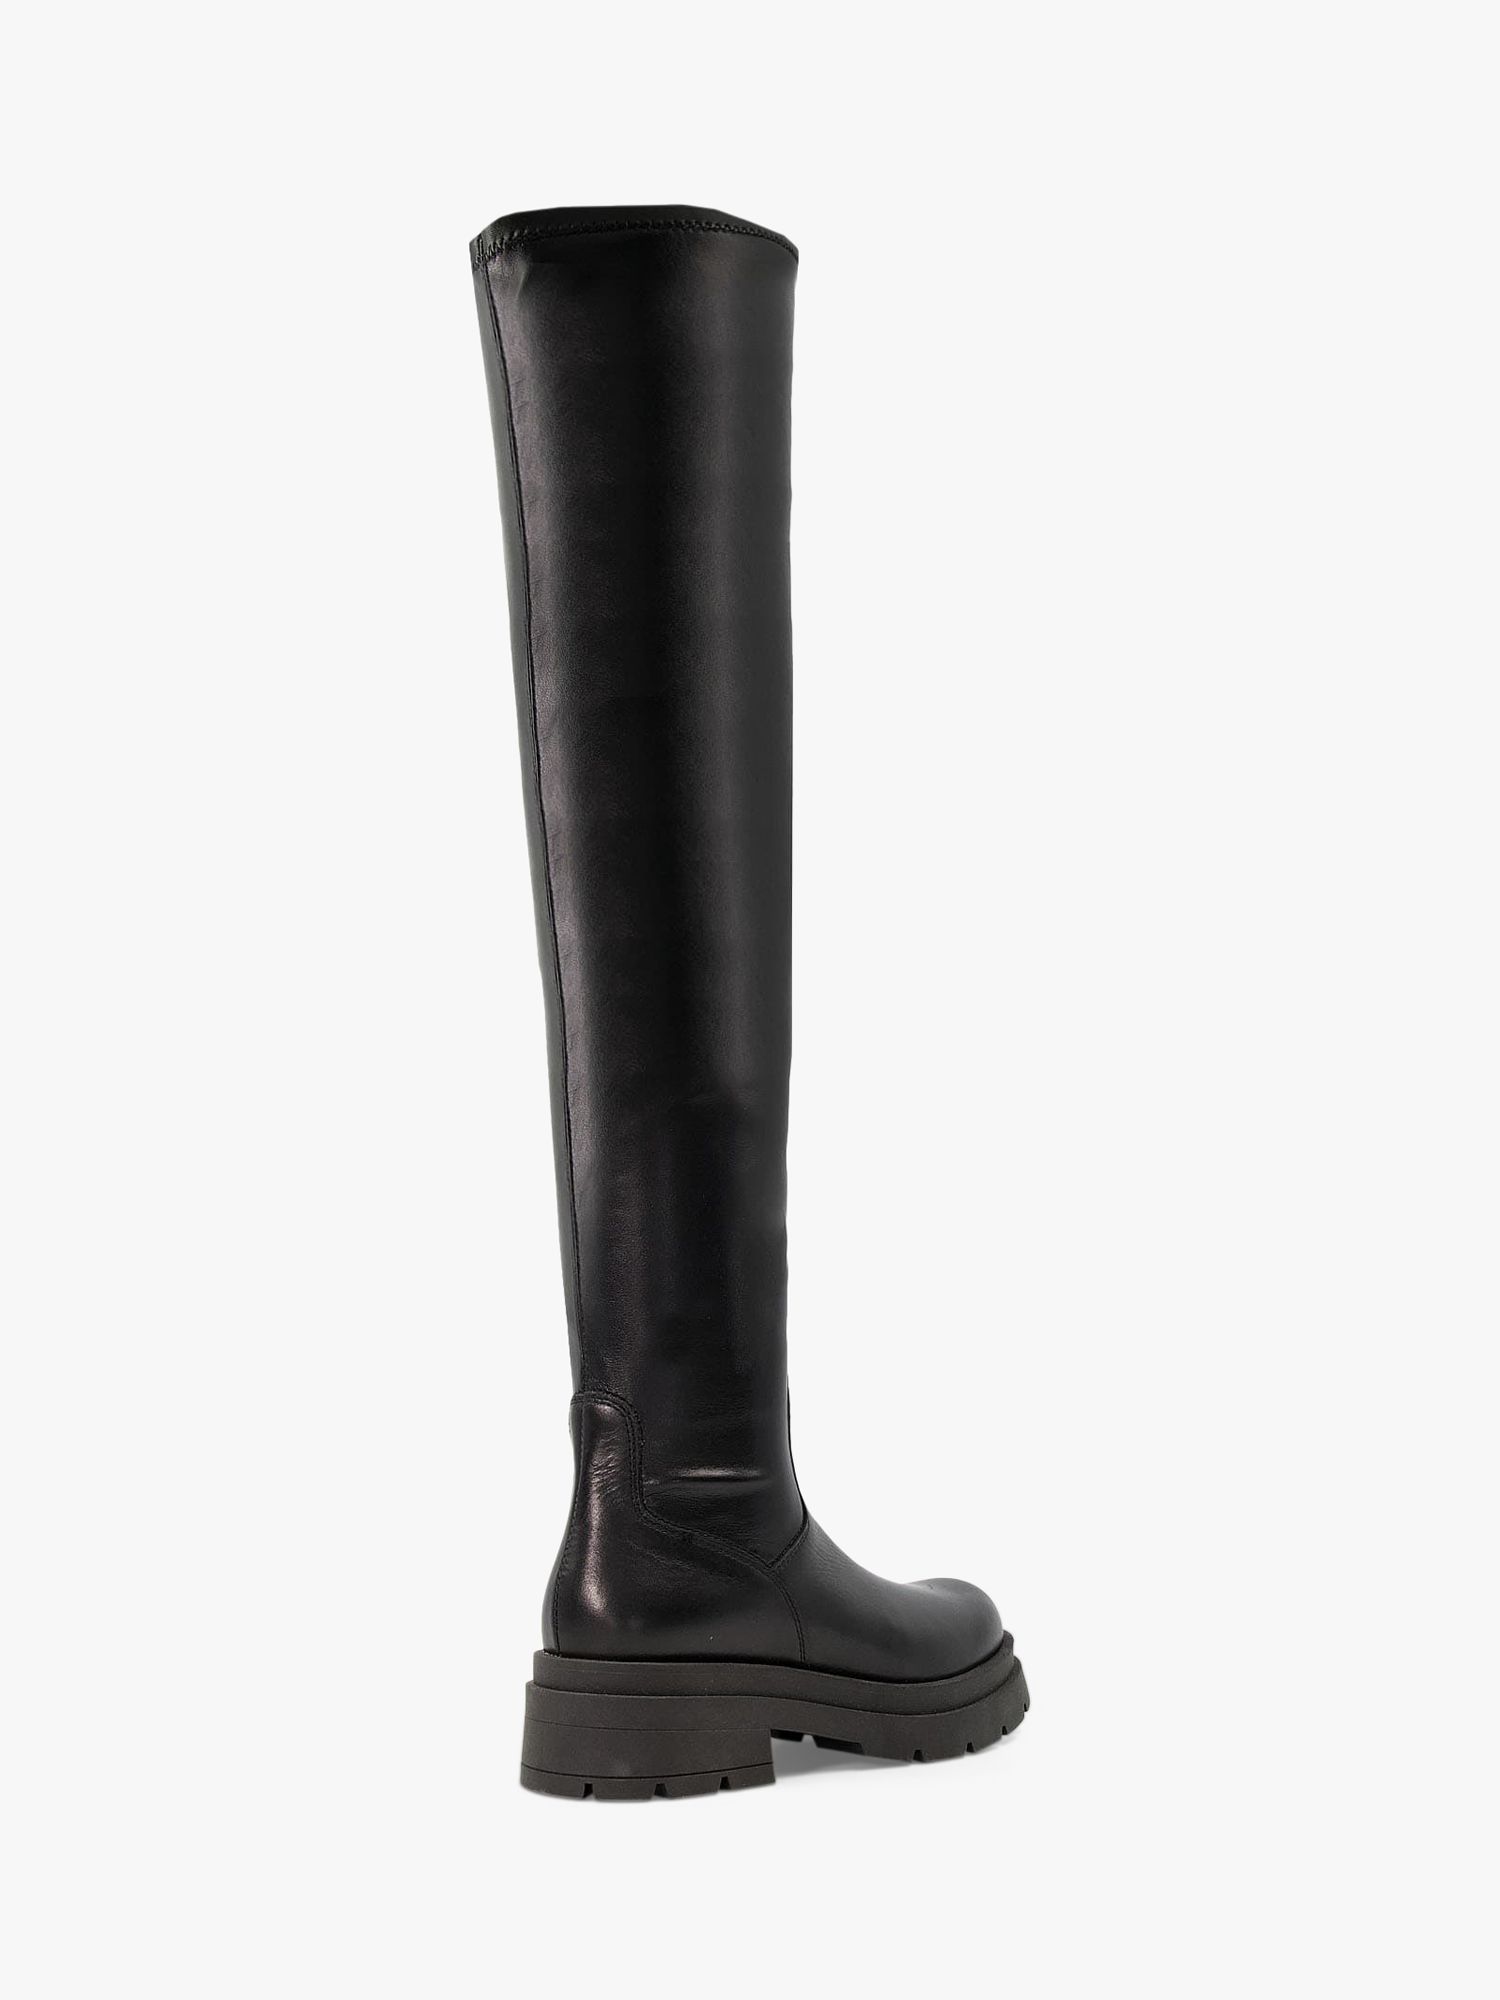 Dune Taurus Leather Knee High Boots, Black at John Lewis & Partners